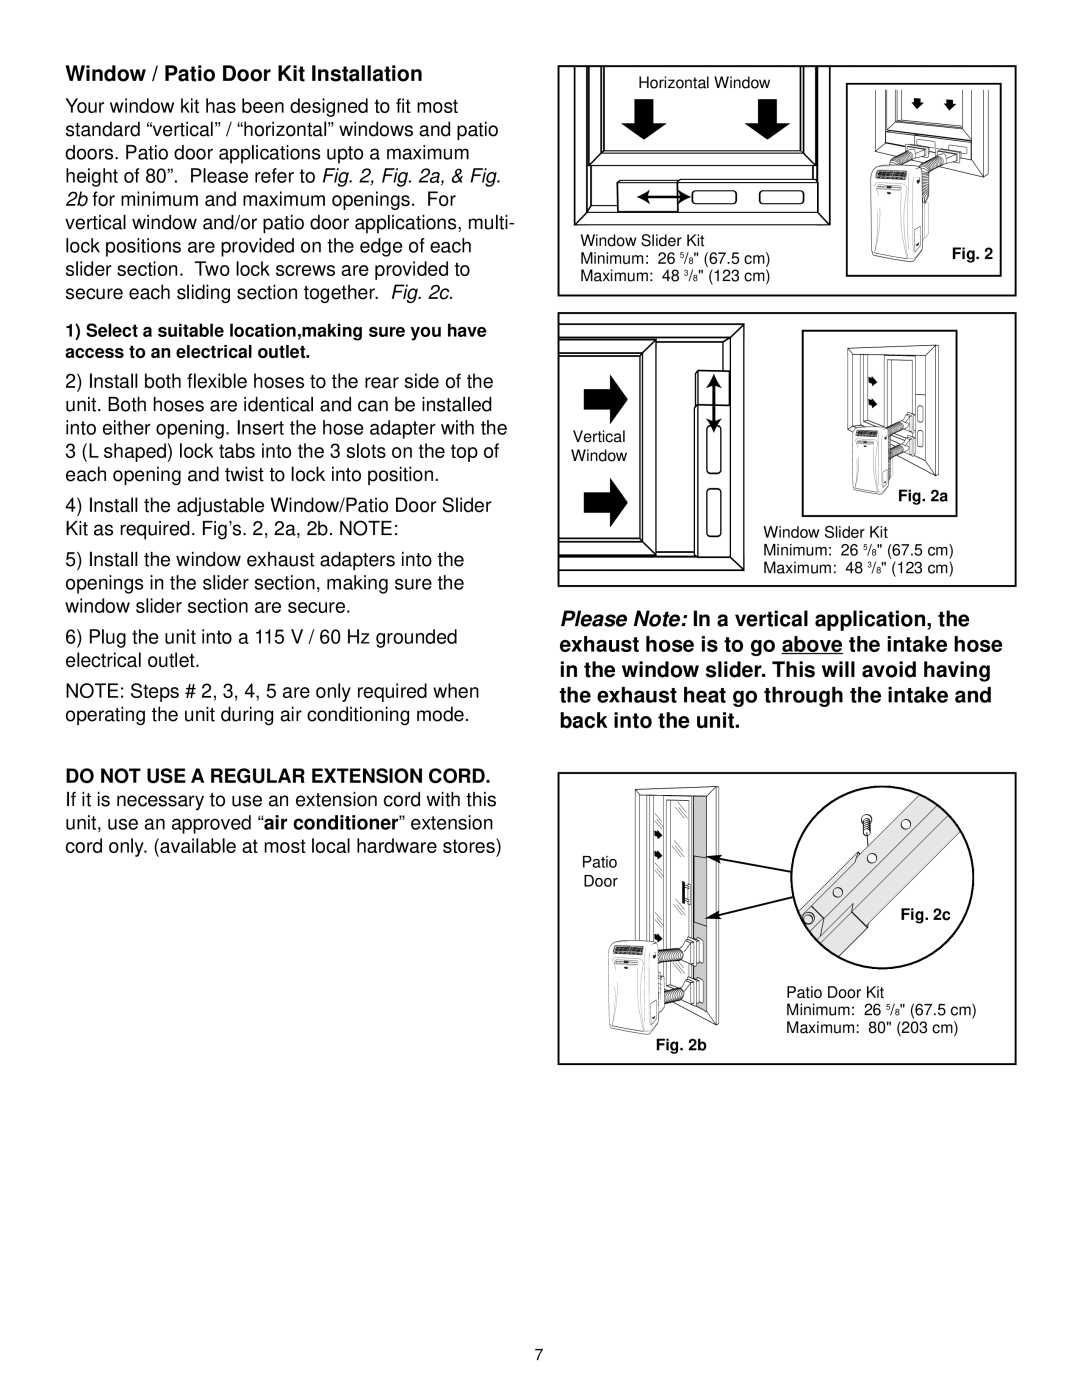 Danby DPAC10030 manual Window / Patio Door Kit Installation 